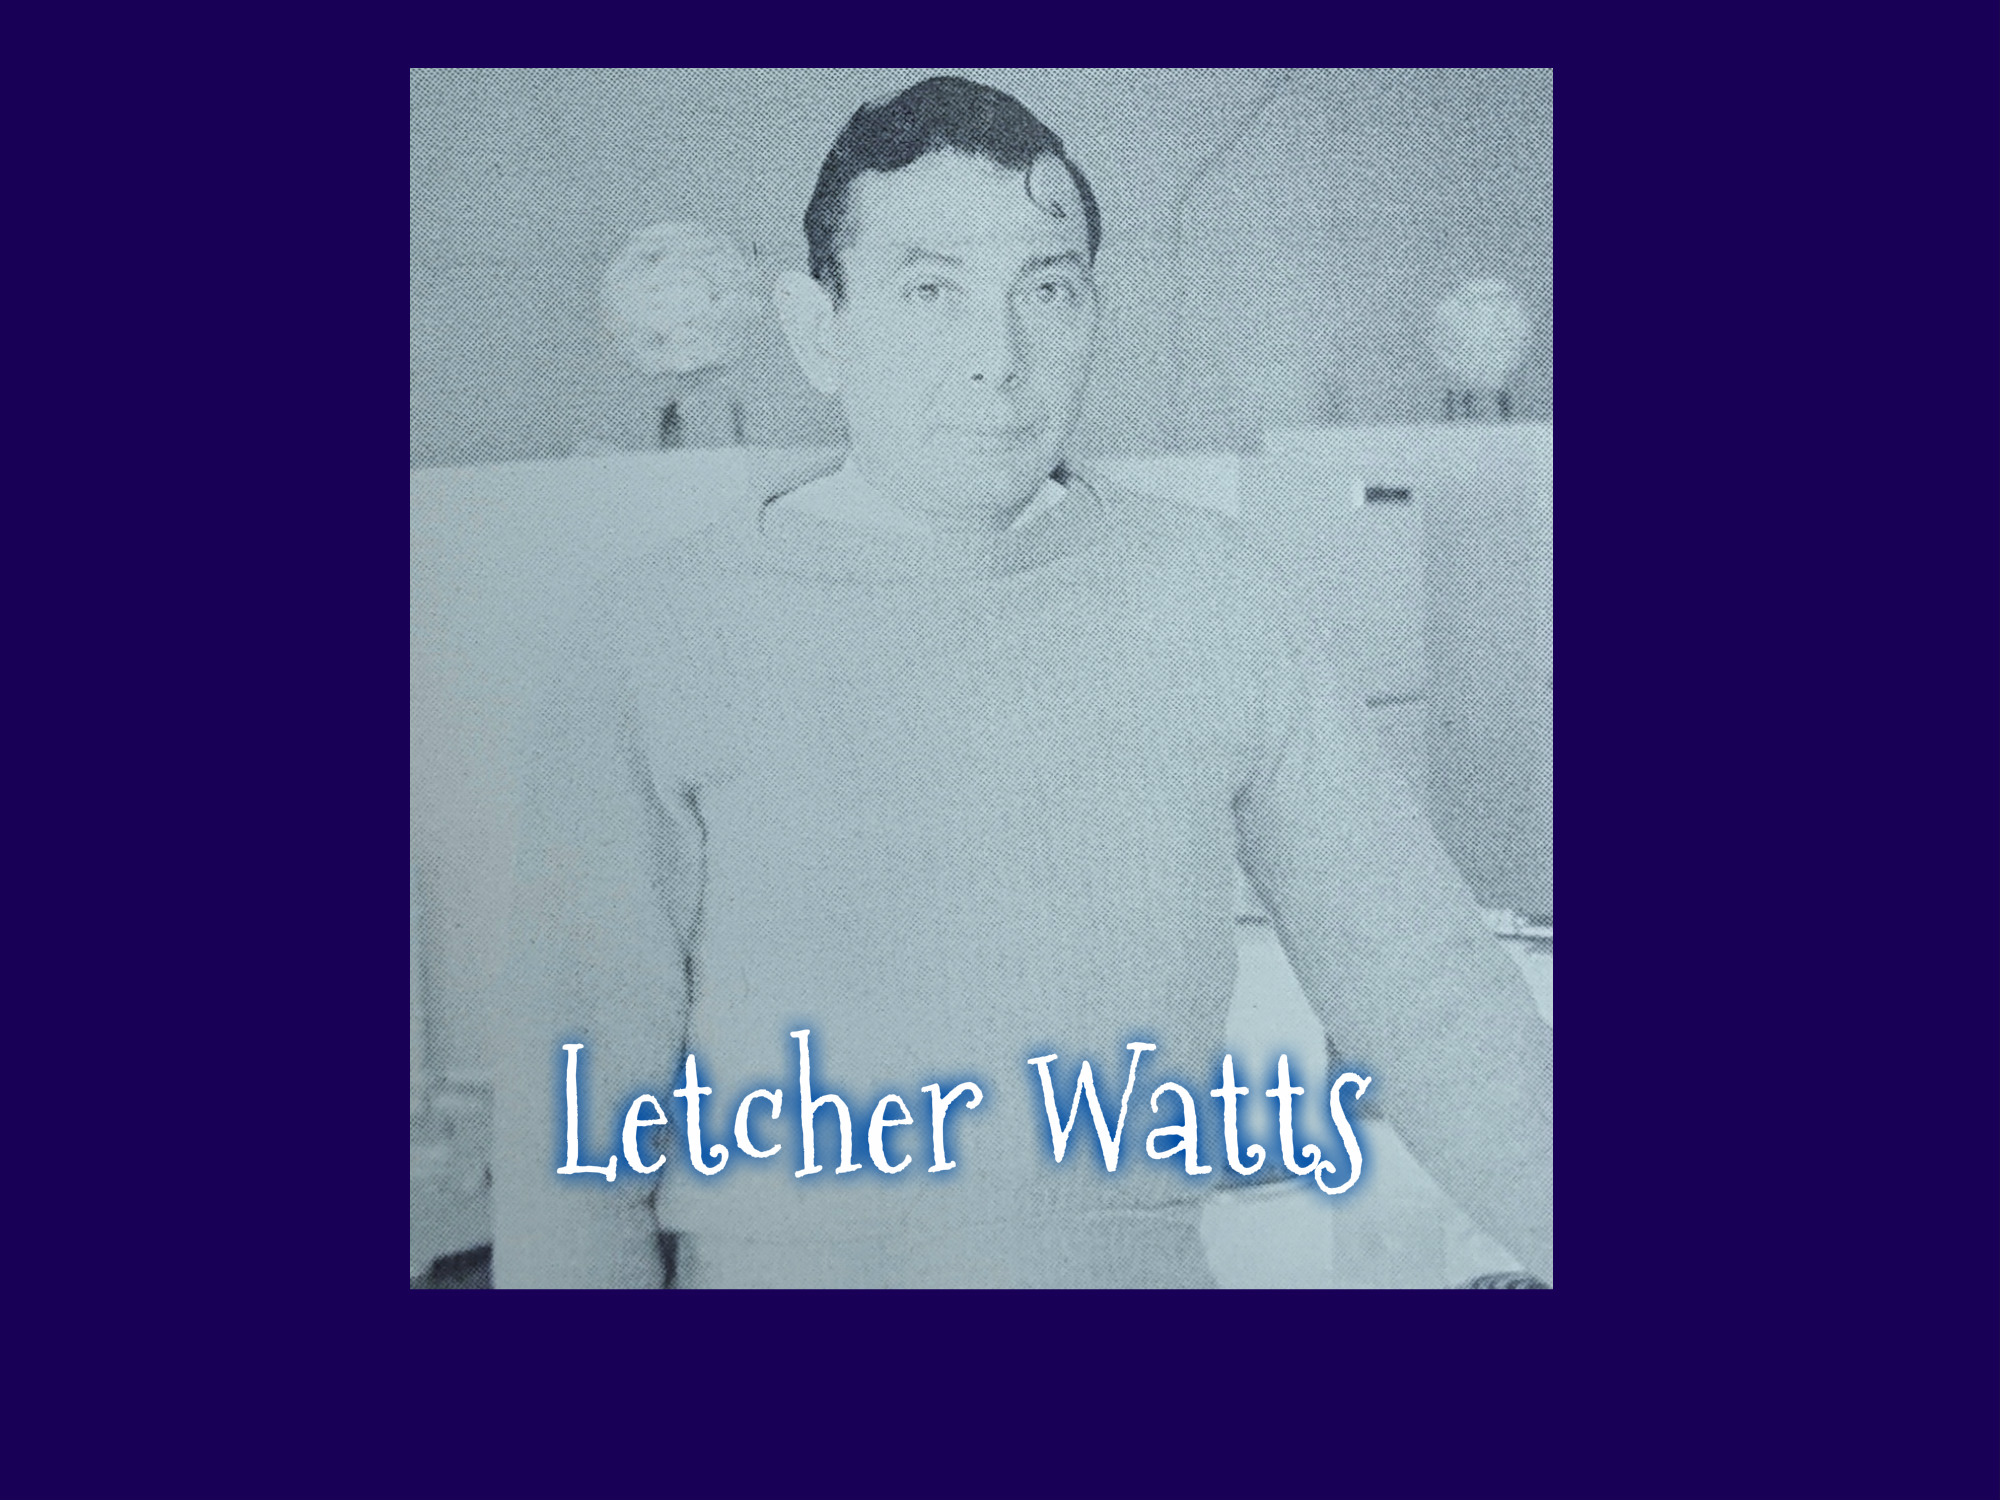 Watts Appliance - Letcher Watts (with children, Carolyn Threlkeld and Steve Watts) - 4/30/16 - # 72